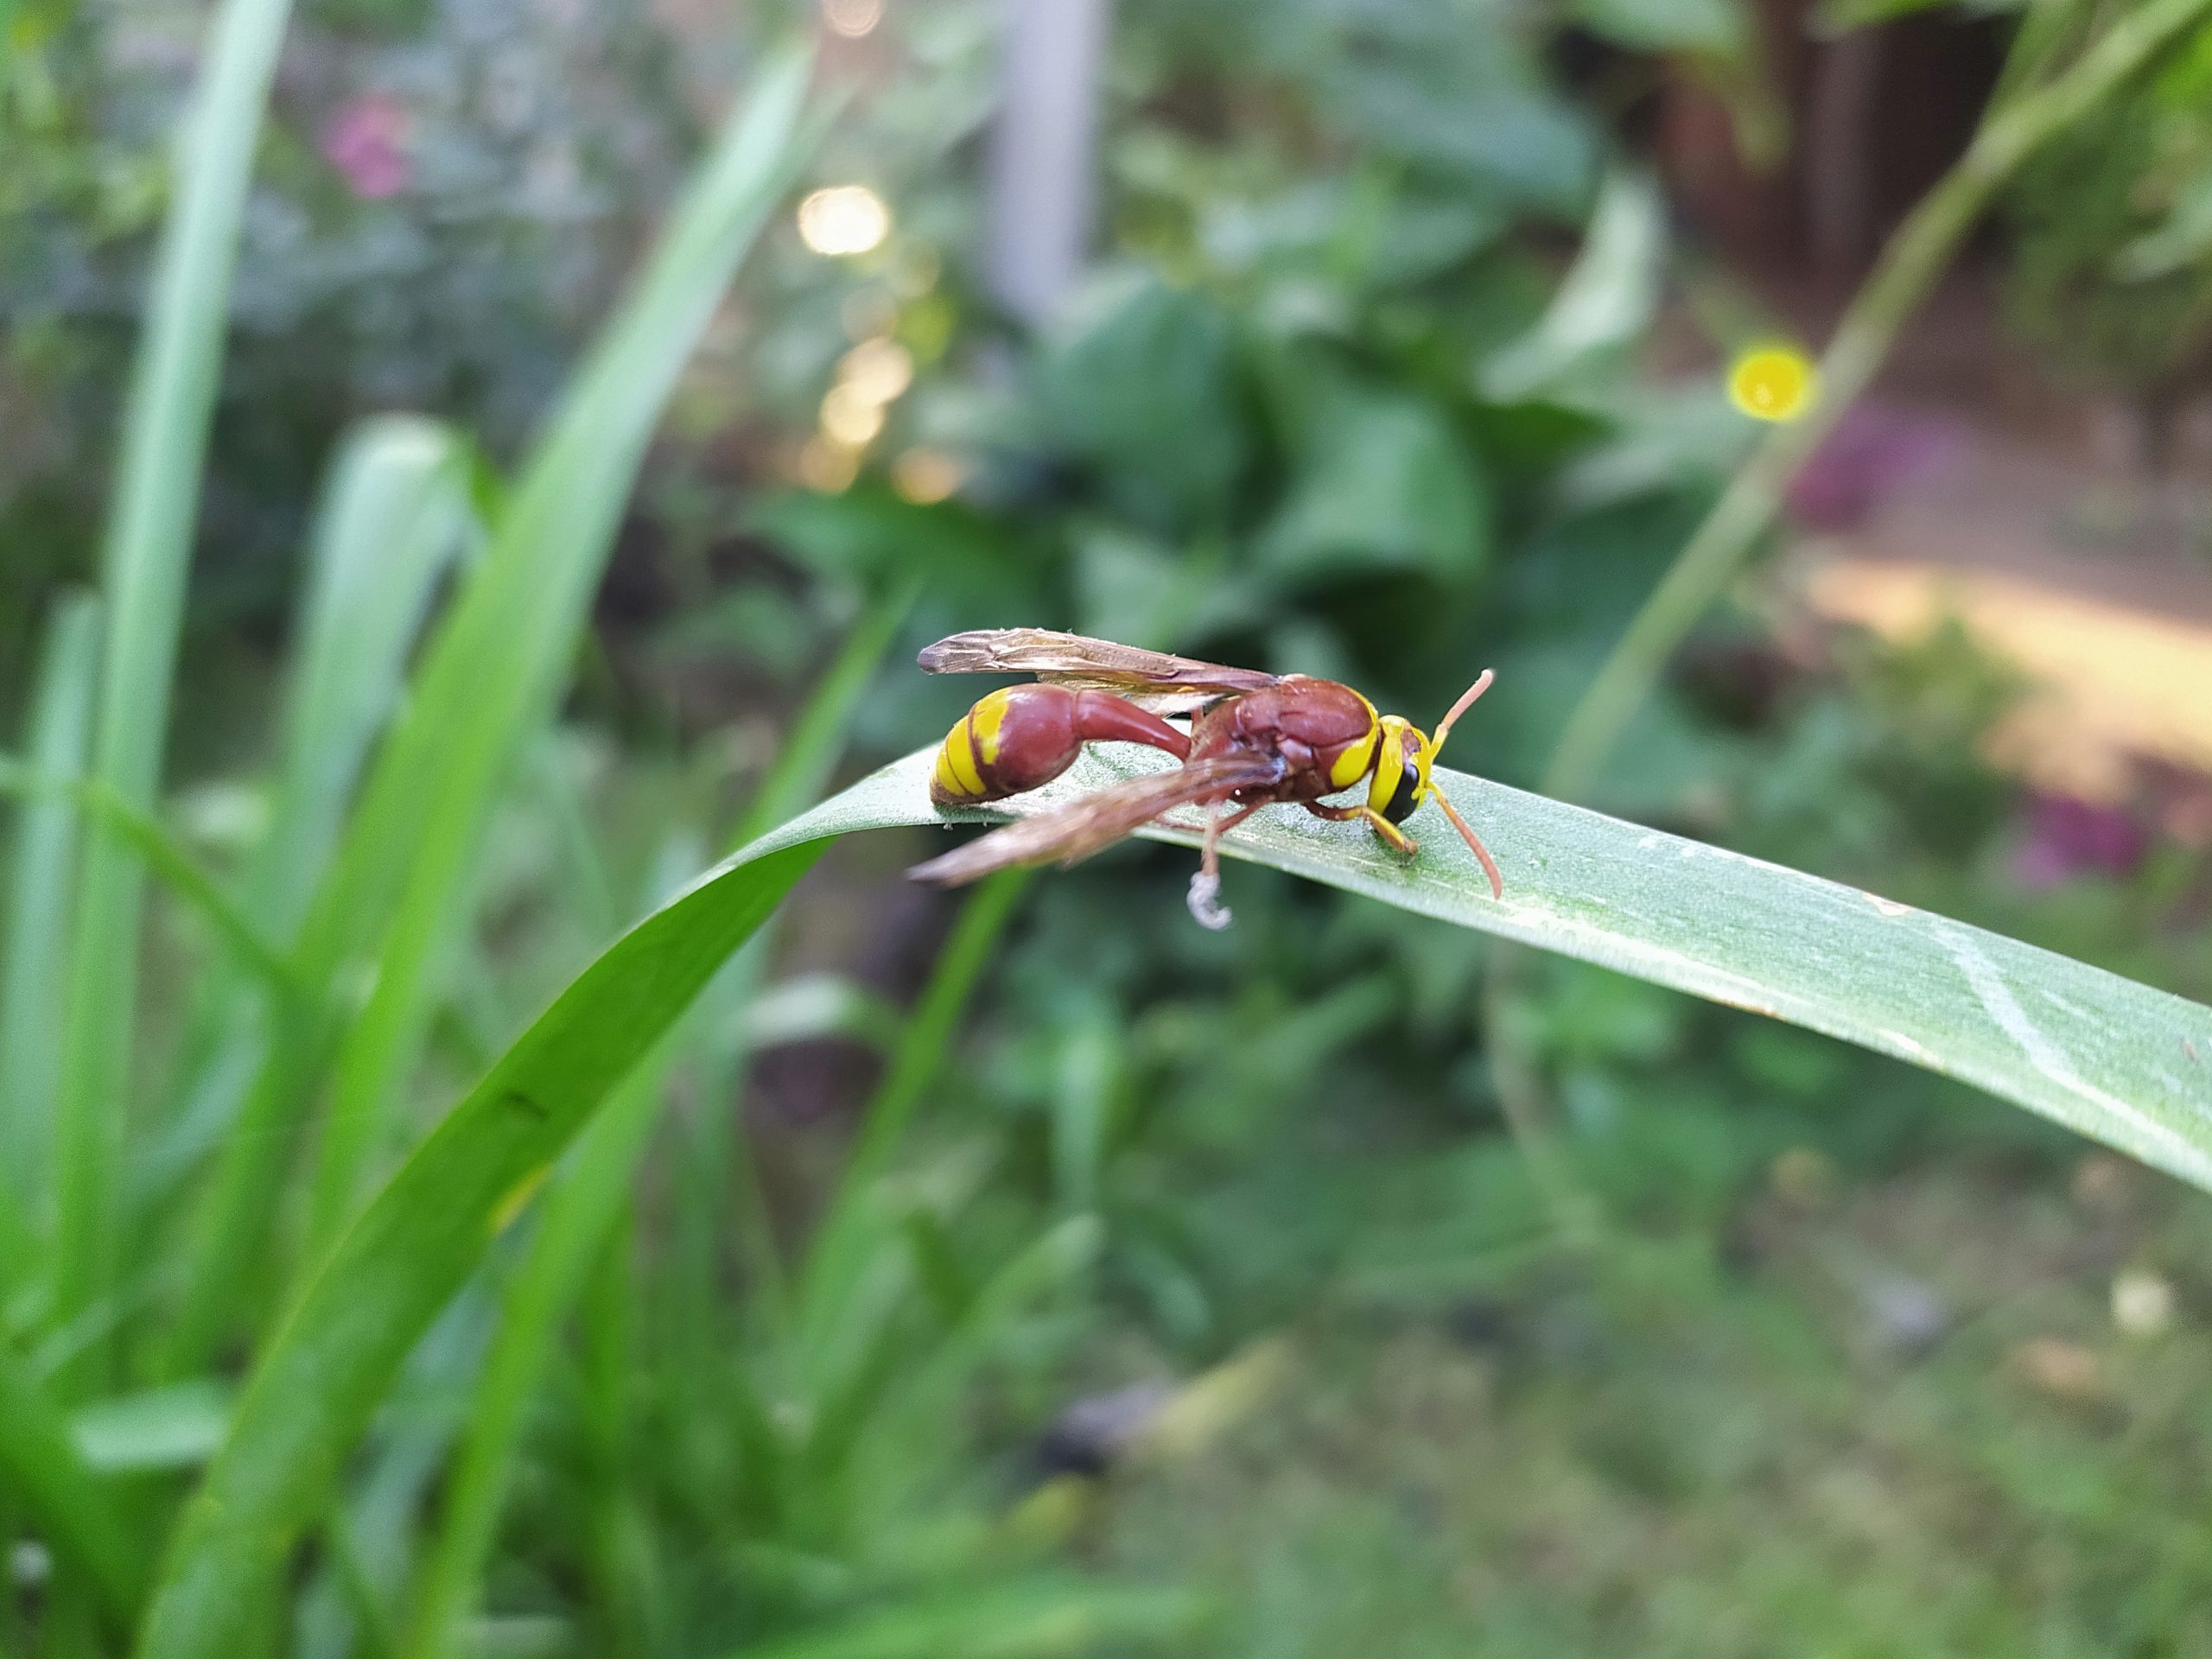 A honey bee on a leaf